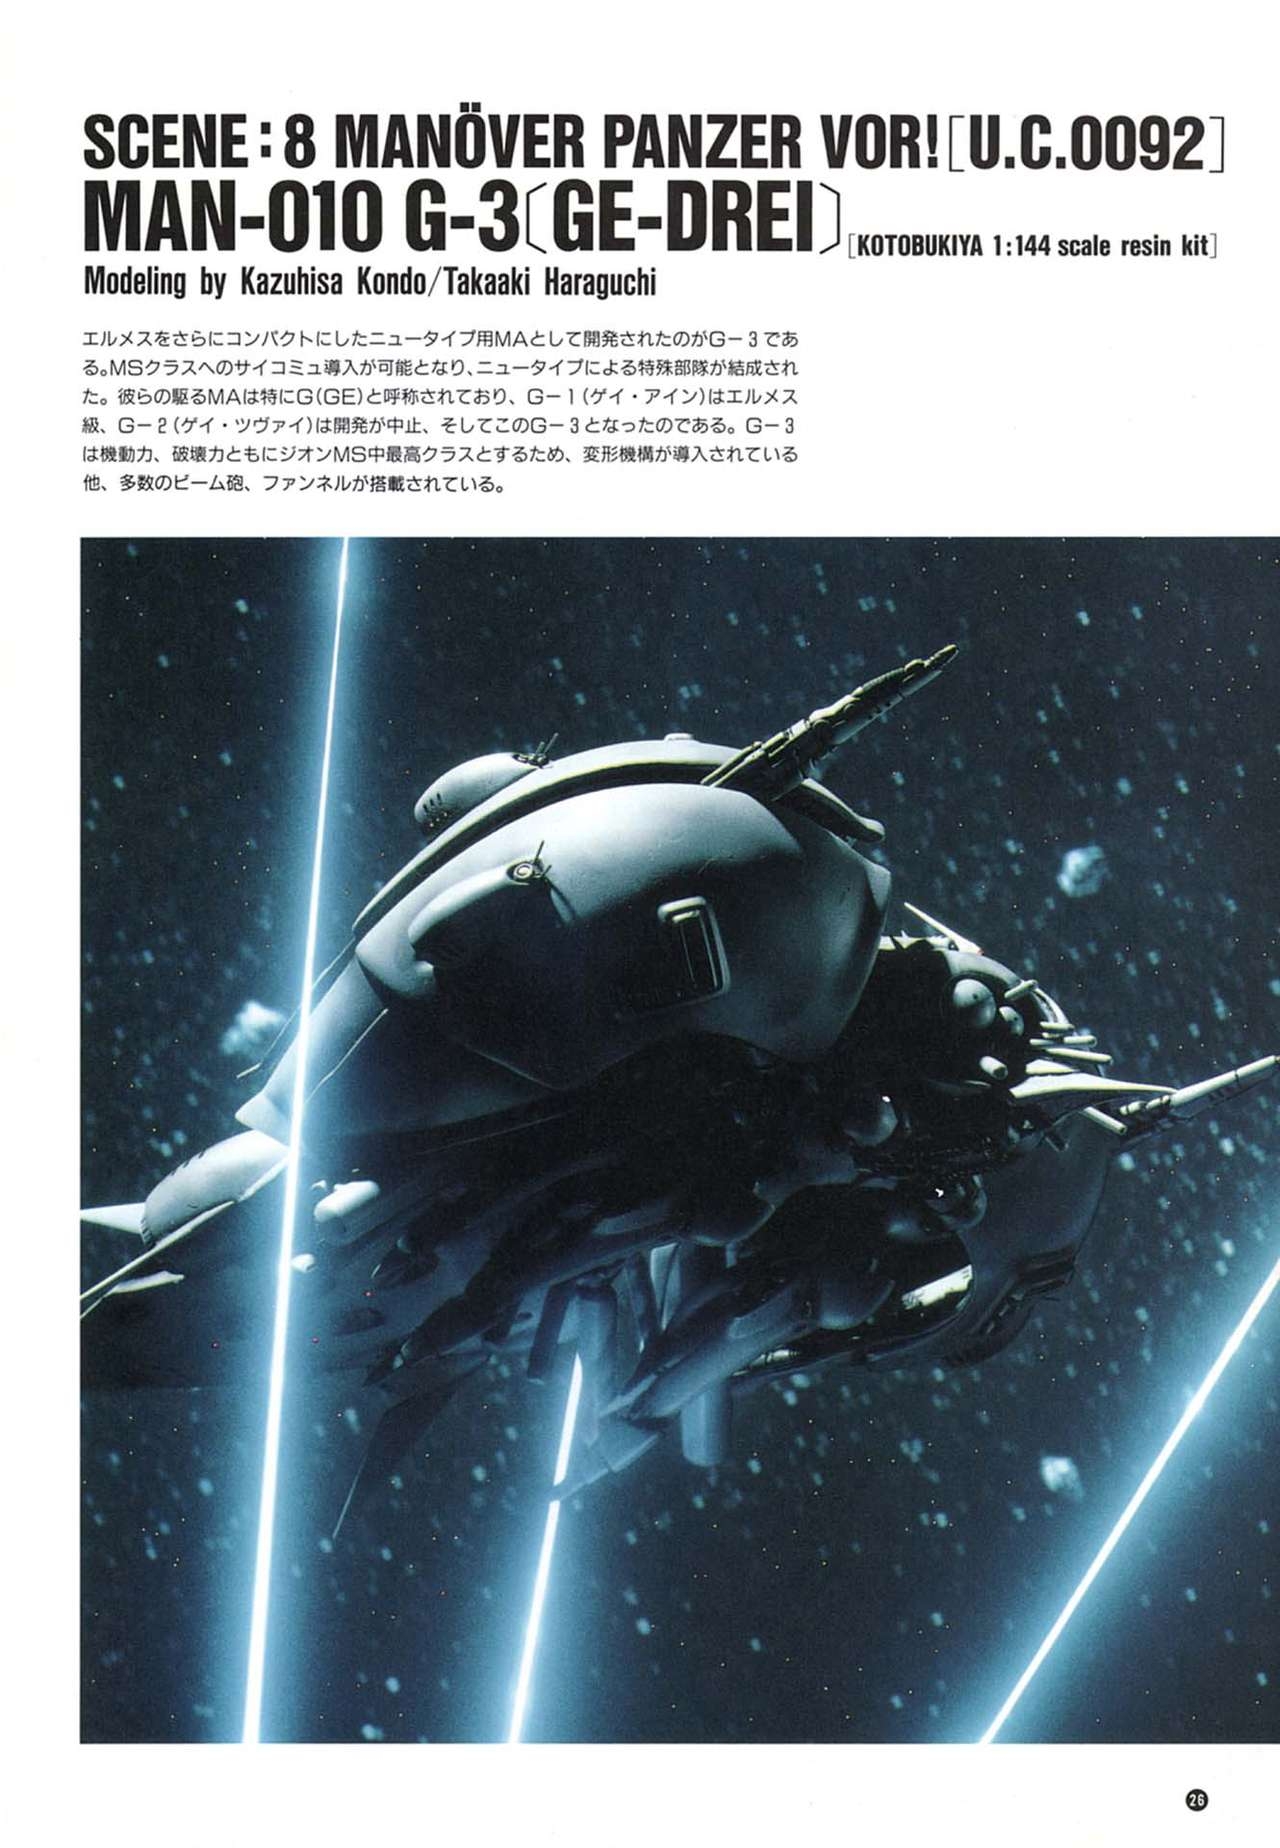 [Kazuhisa Kondo] Kazuhisa Kondo 2D & 3D Works - Go Ahead - From Mobile Suit Gundam to Original Mechanism 25